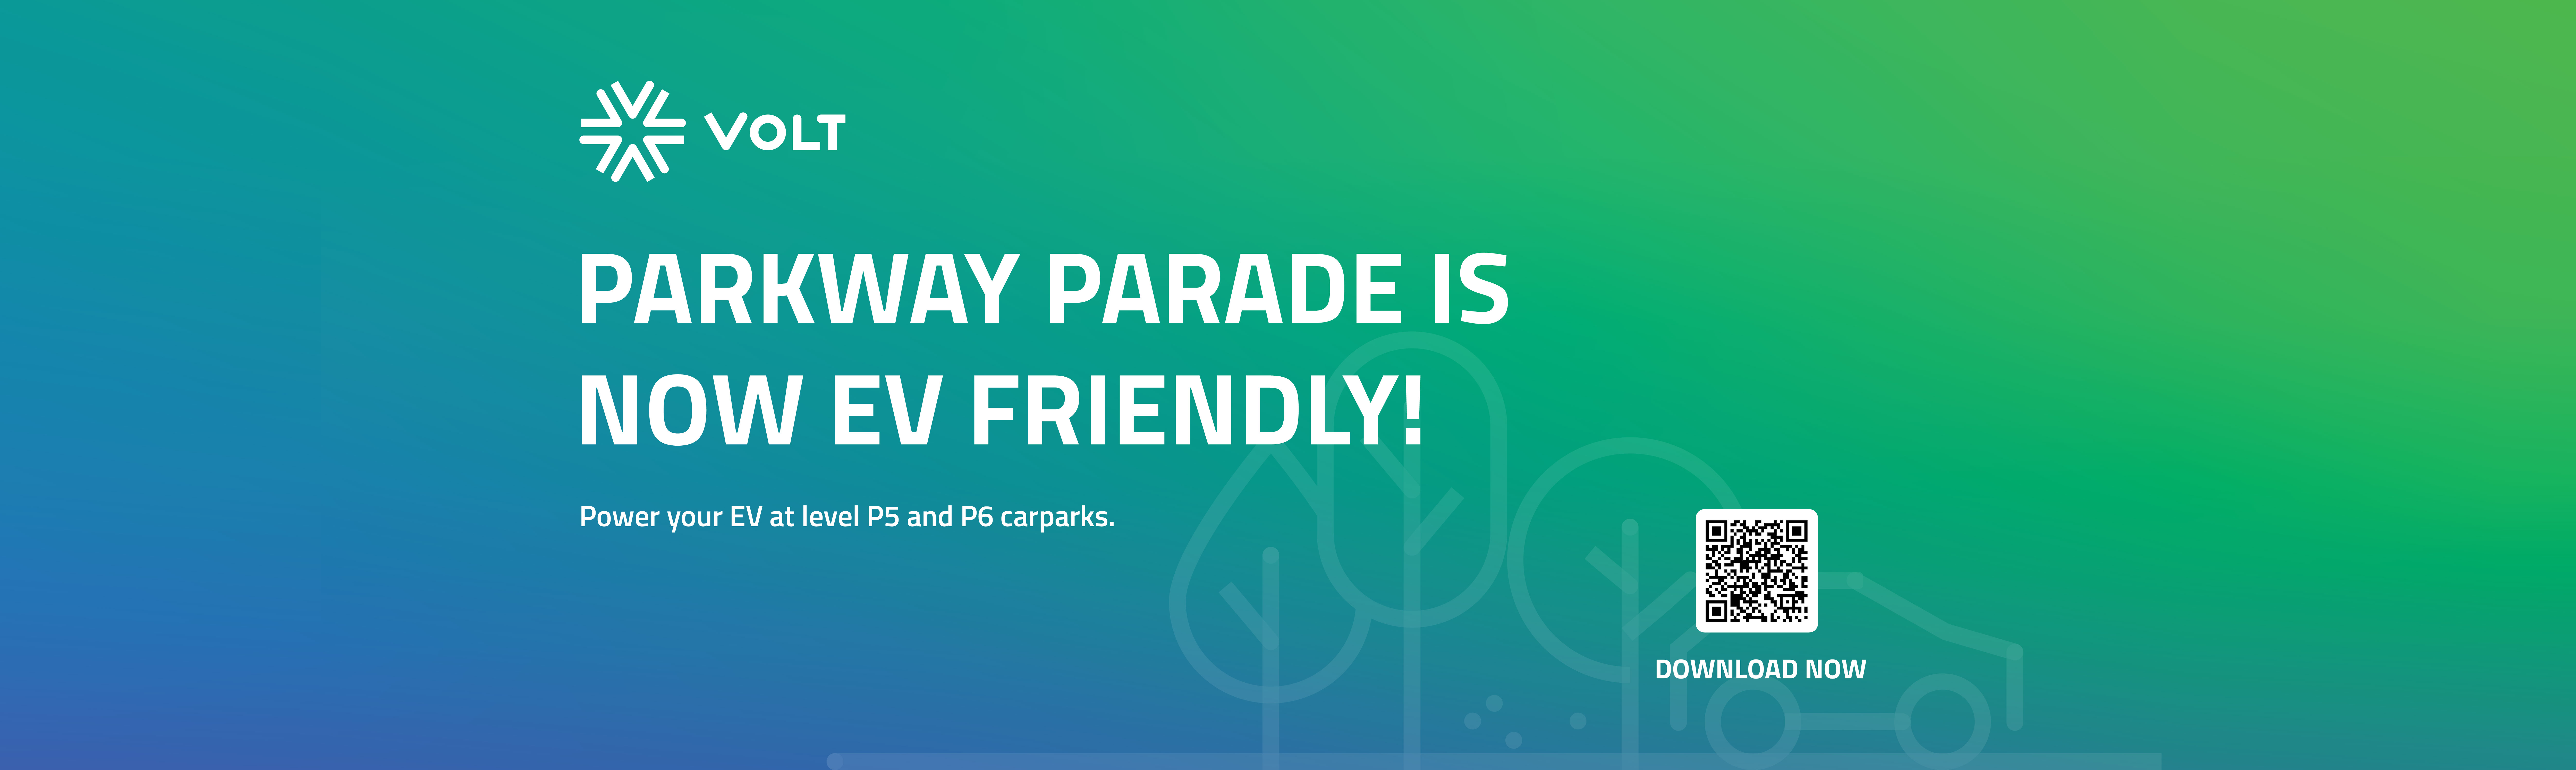 parkway parade web banner July-01.jpg